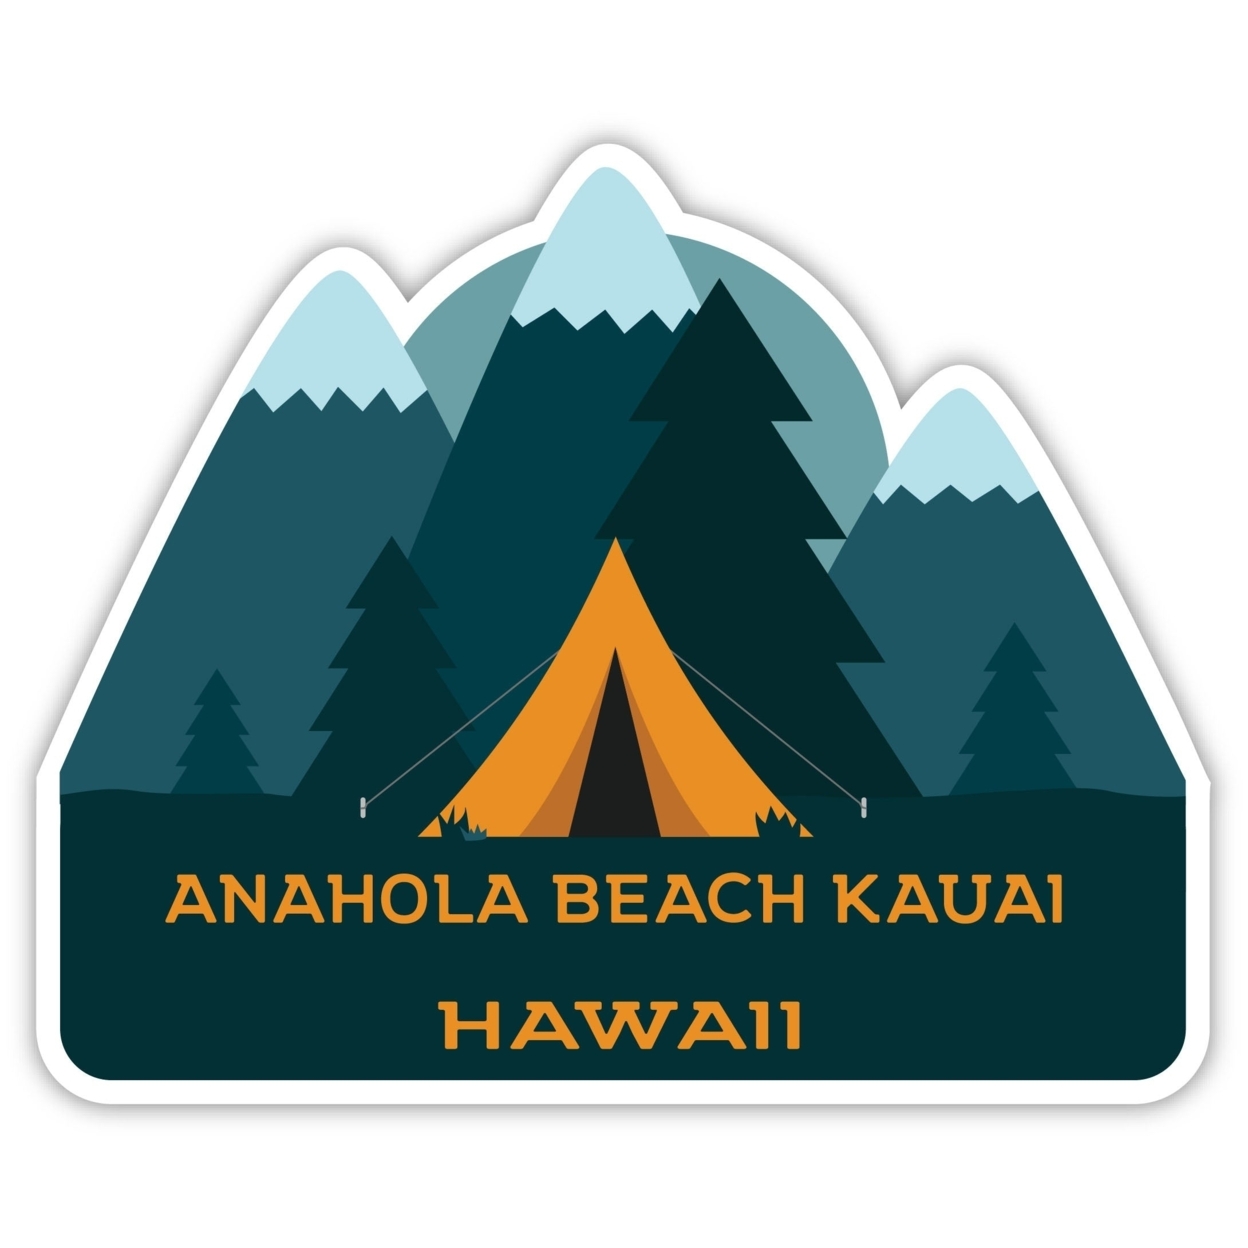 Anahola Beach Kauai Hawaii Souvenir Decorative Stickers (Choose Theme And Size) - 4-Pack, 12-Inch, Tent